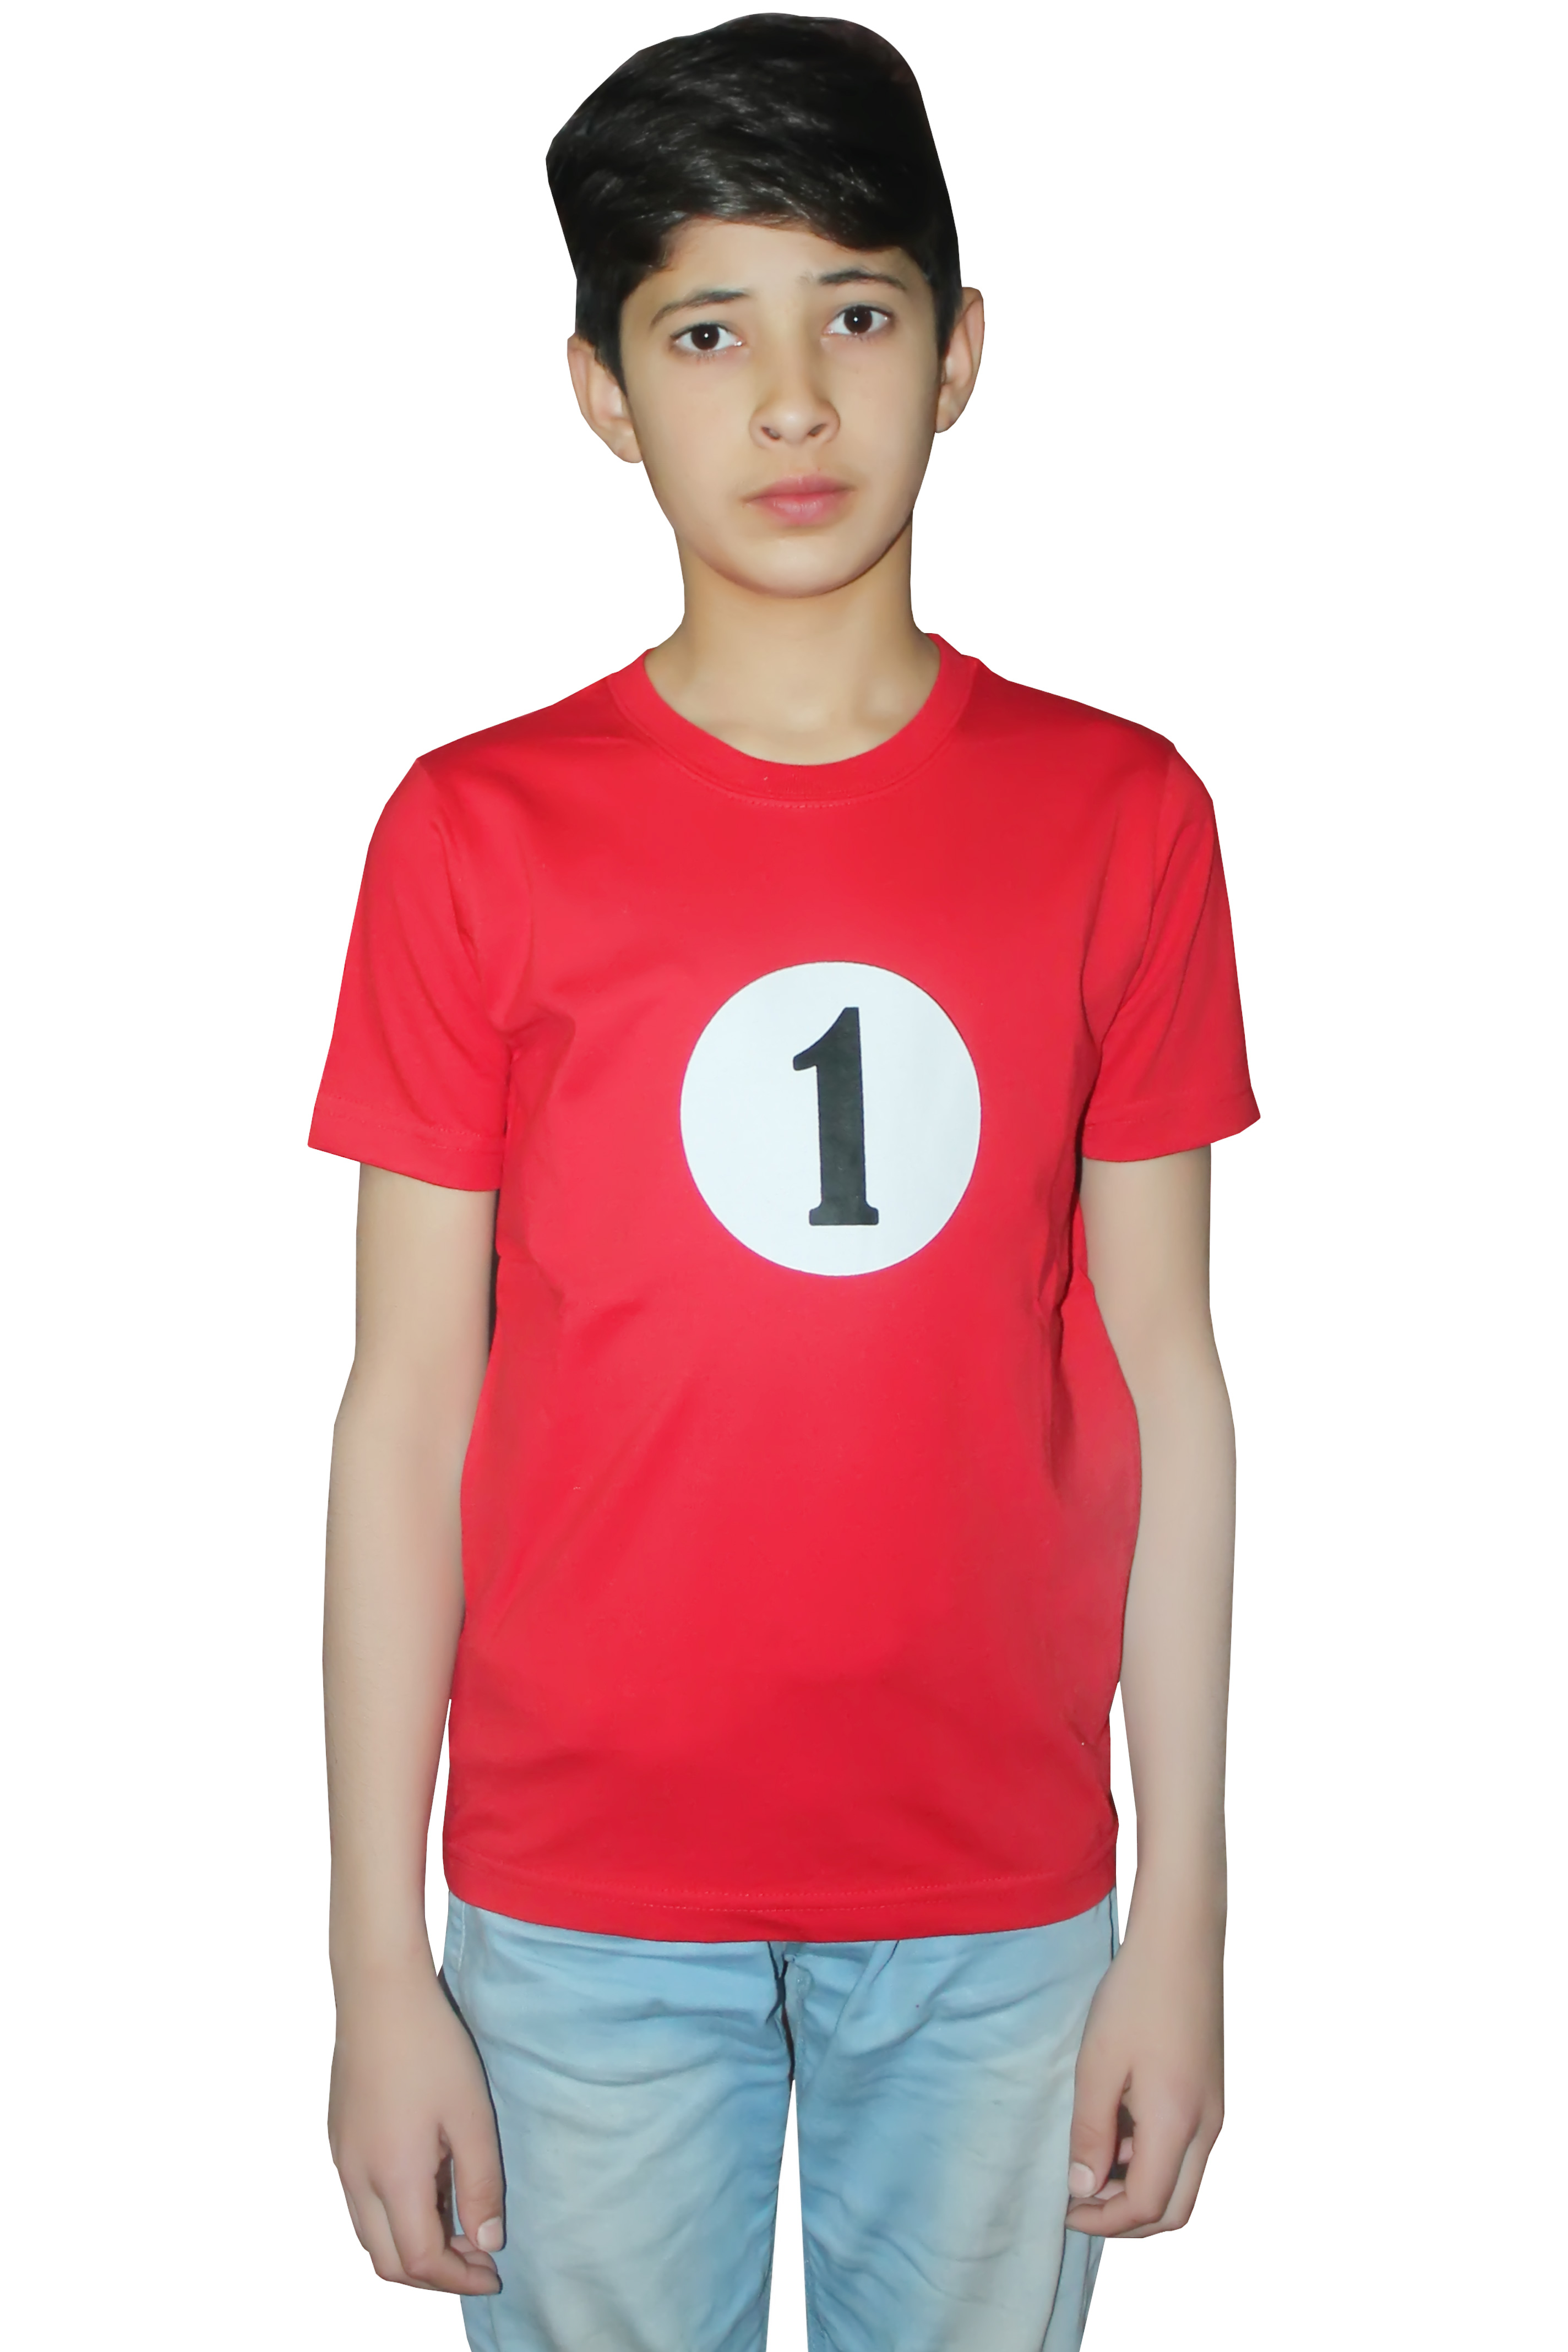 Wickedfun Children's 1 Red Printed T-Shirt